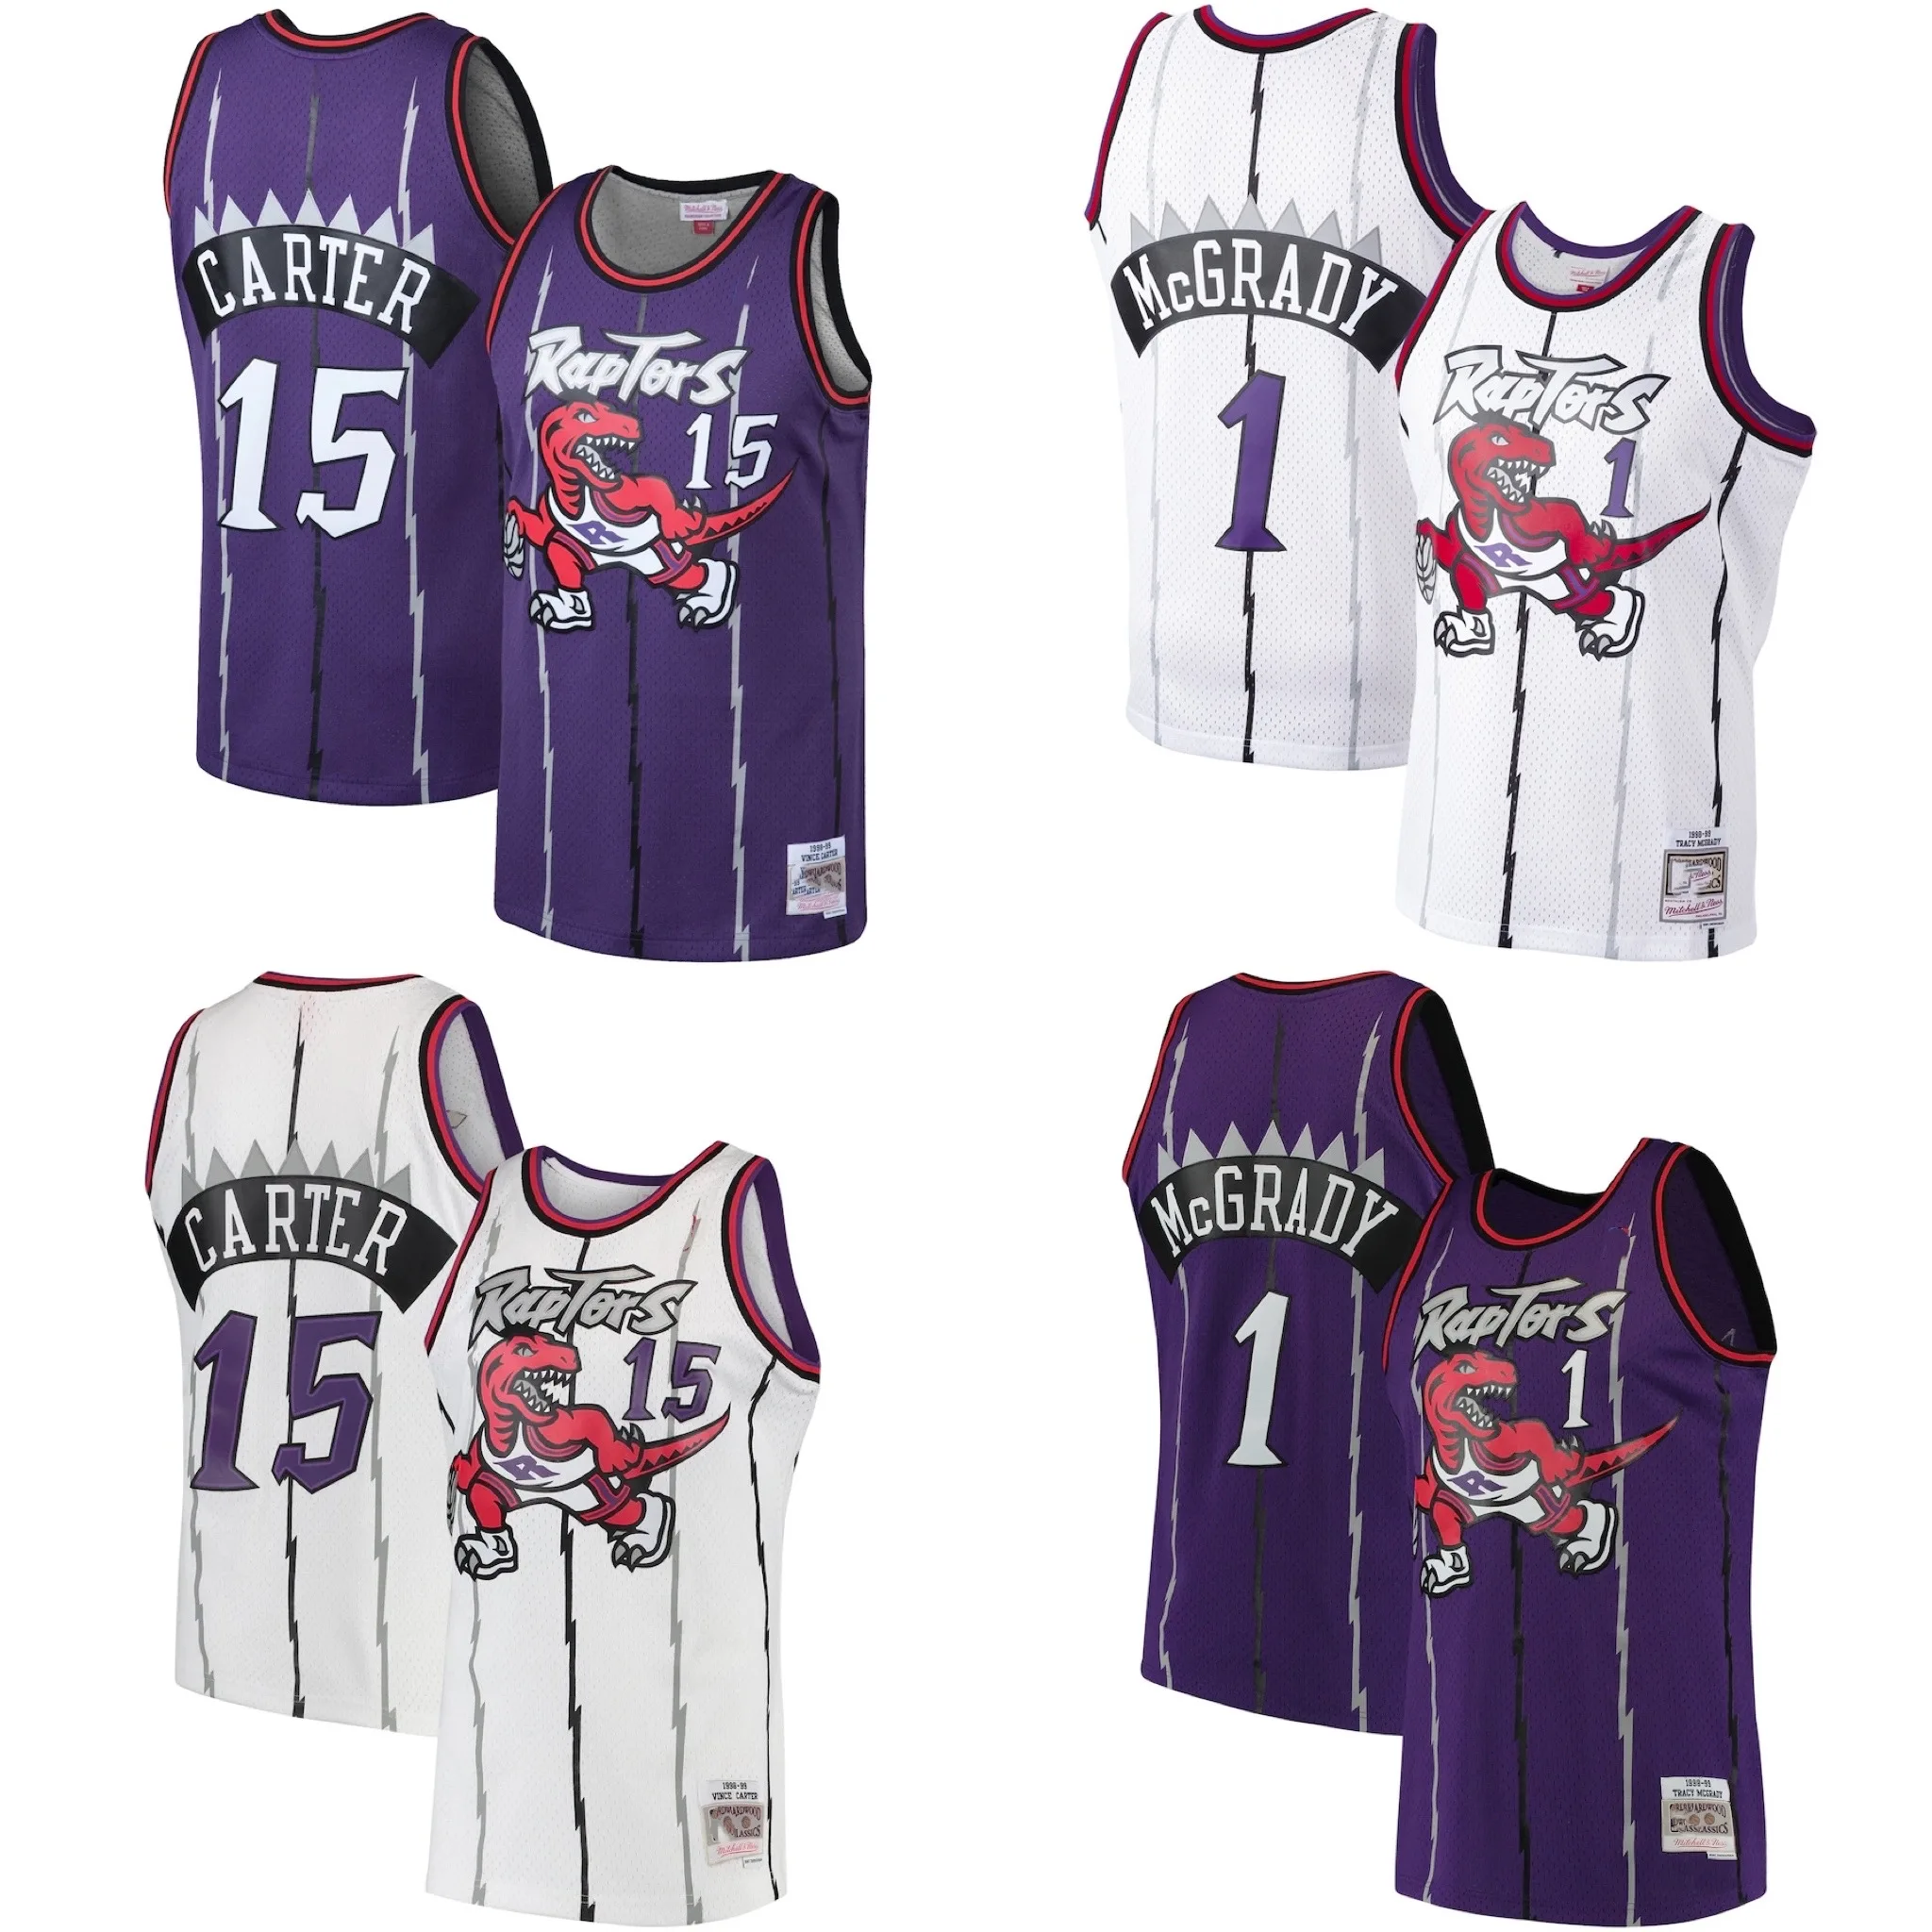 

Wholesale Toronto City Basketball Jersey Stitched cheap Men Raptors Purple team uniform 1 McGrady 15 Carter-s 43 Siakam